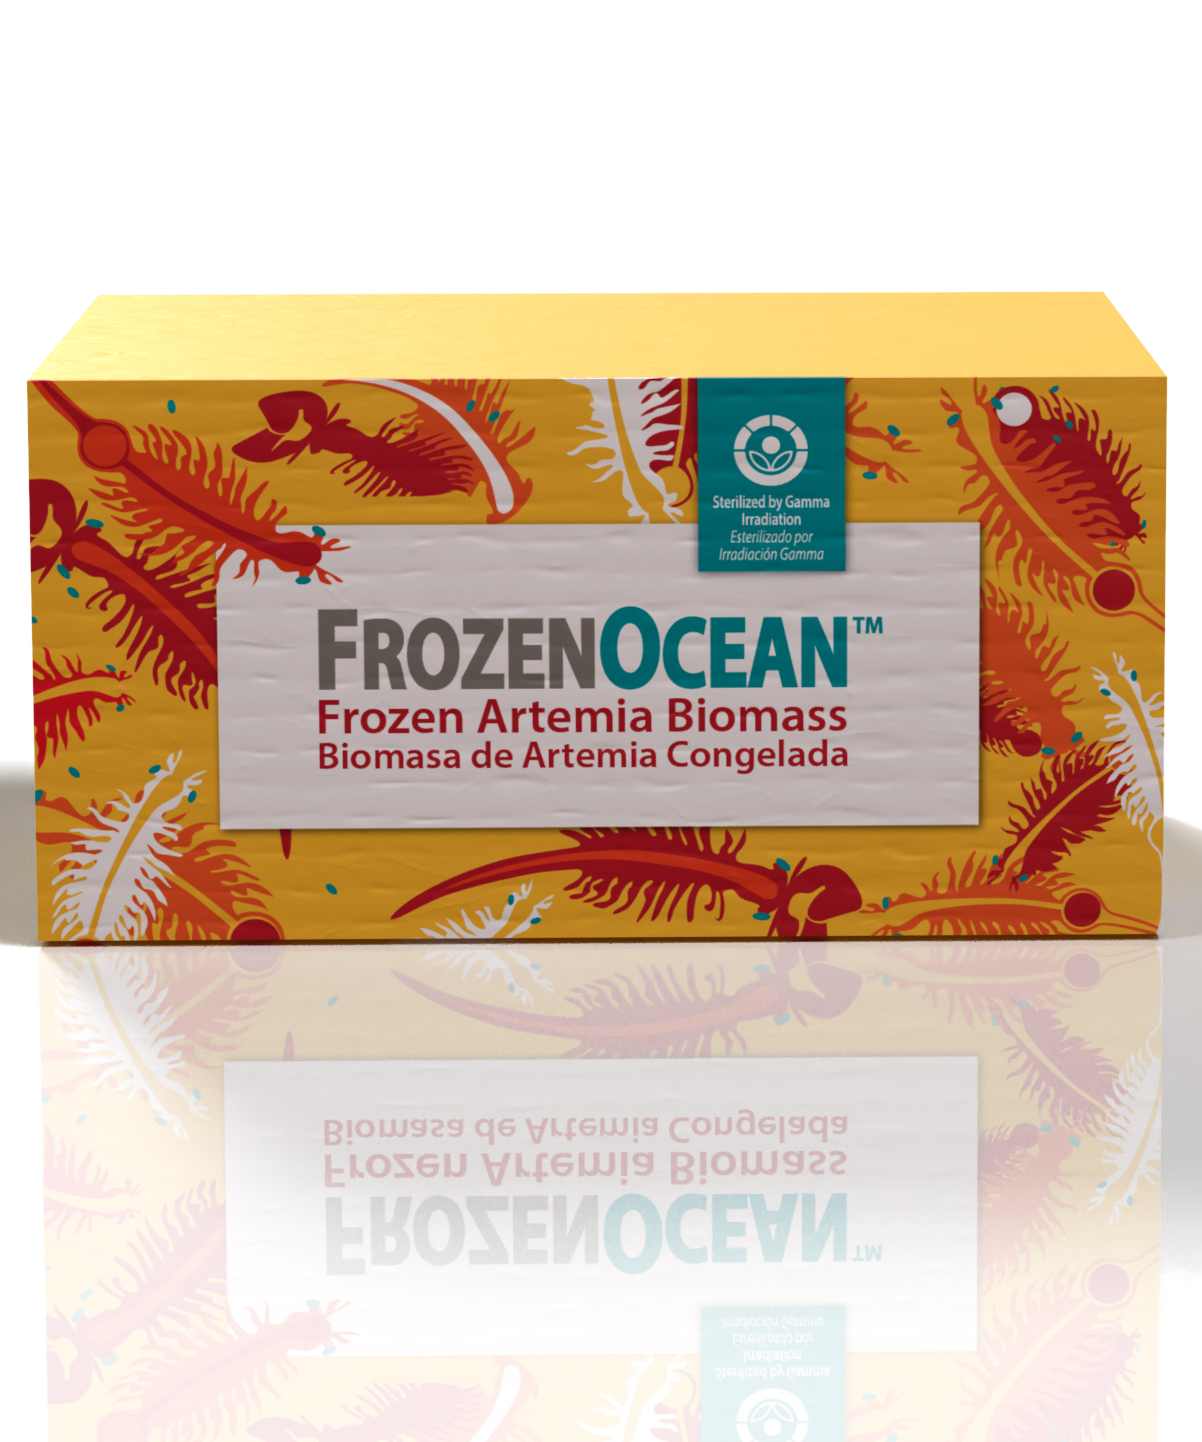 Frozen Ocean® Biomasa de Artemia Congelada